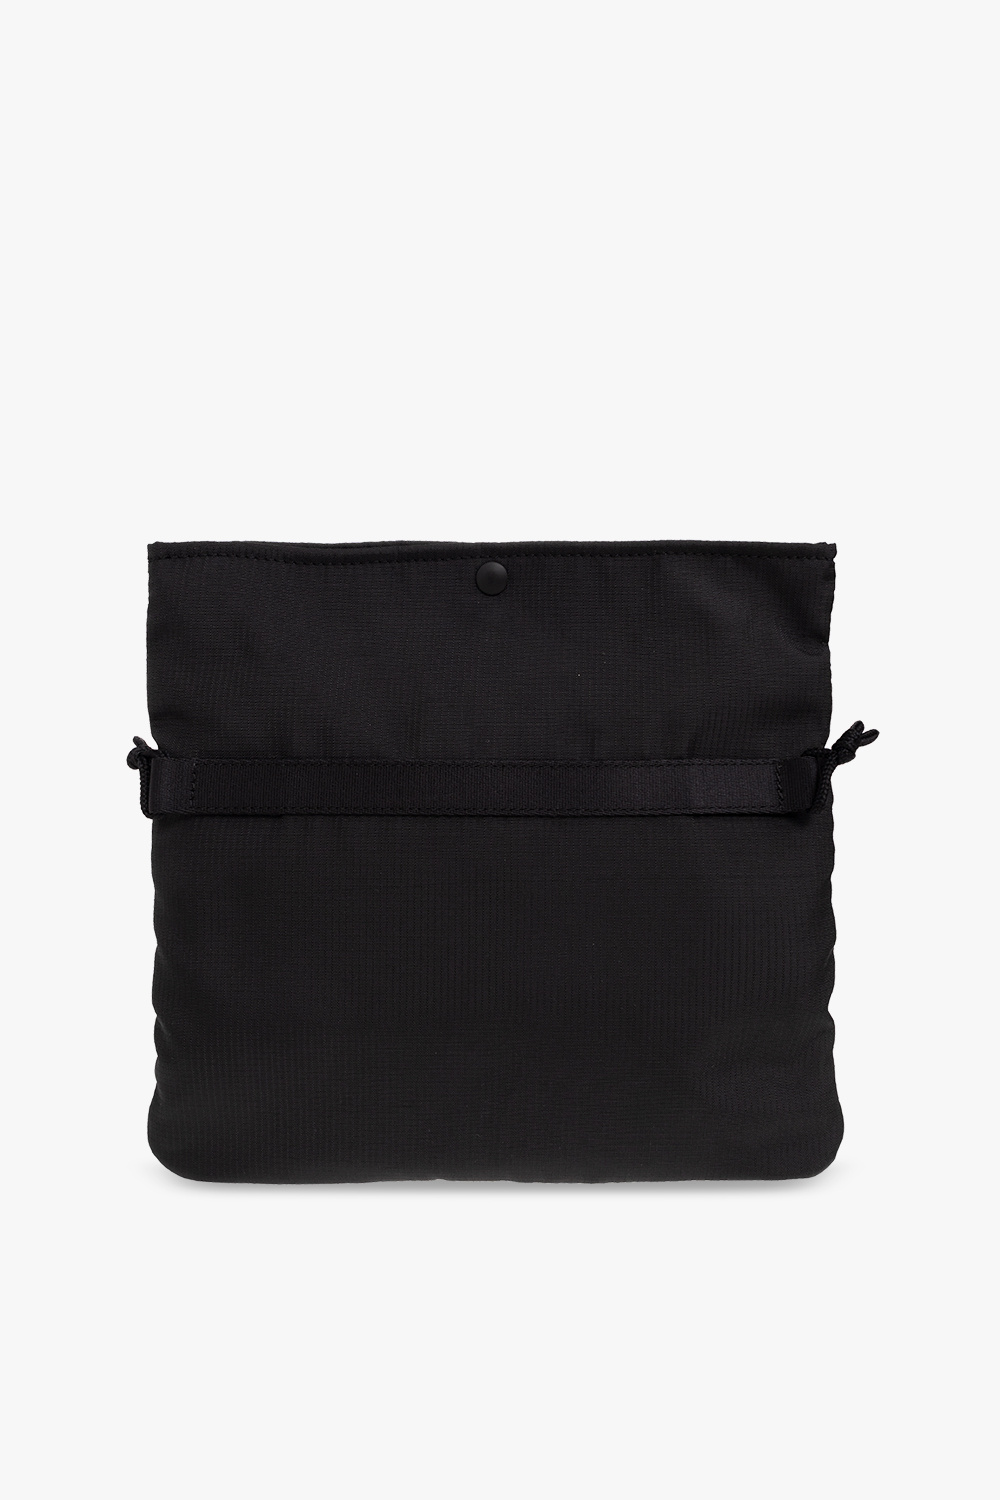 Moncler Genius 7 This black beltpack bag from